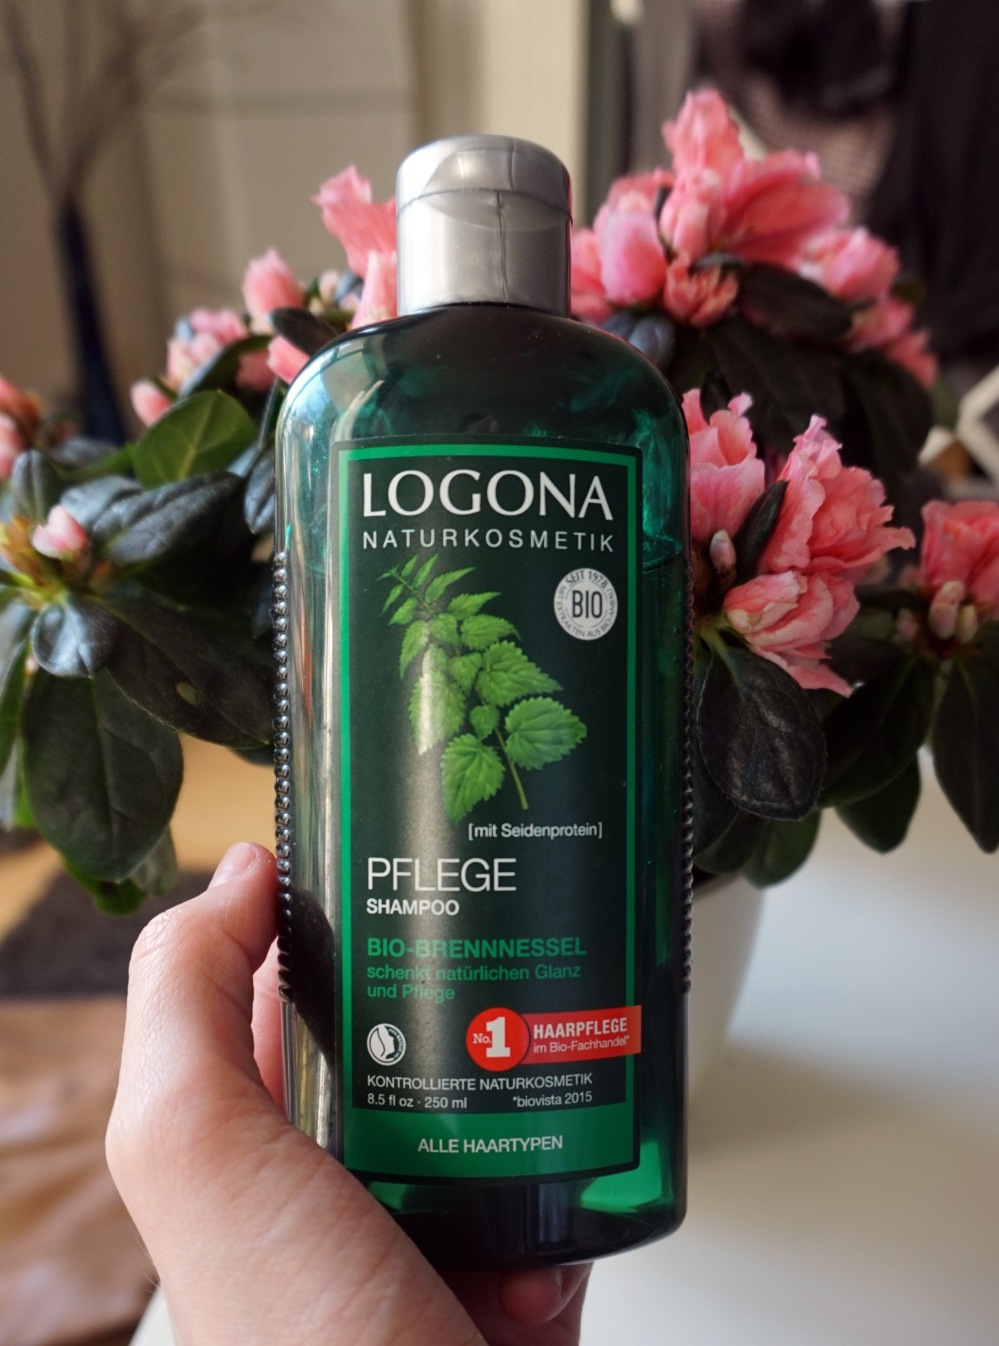 – NATURE – Review: GOOD Logona shampoo care FOR hair